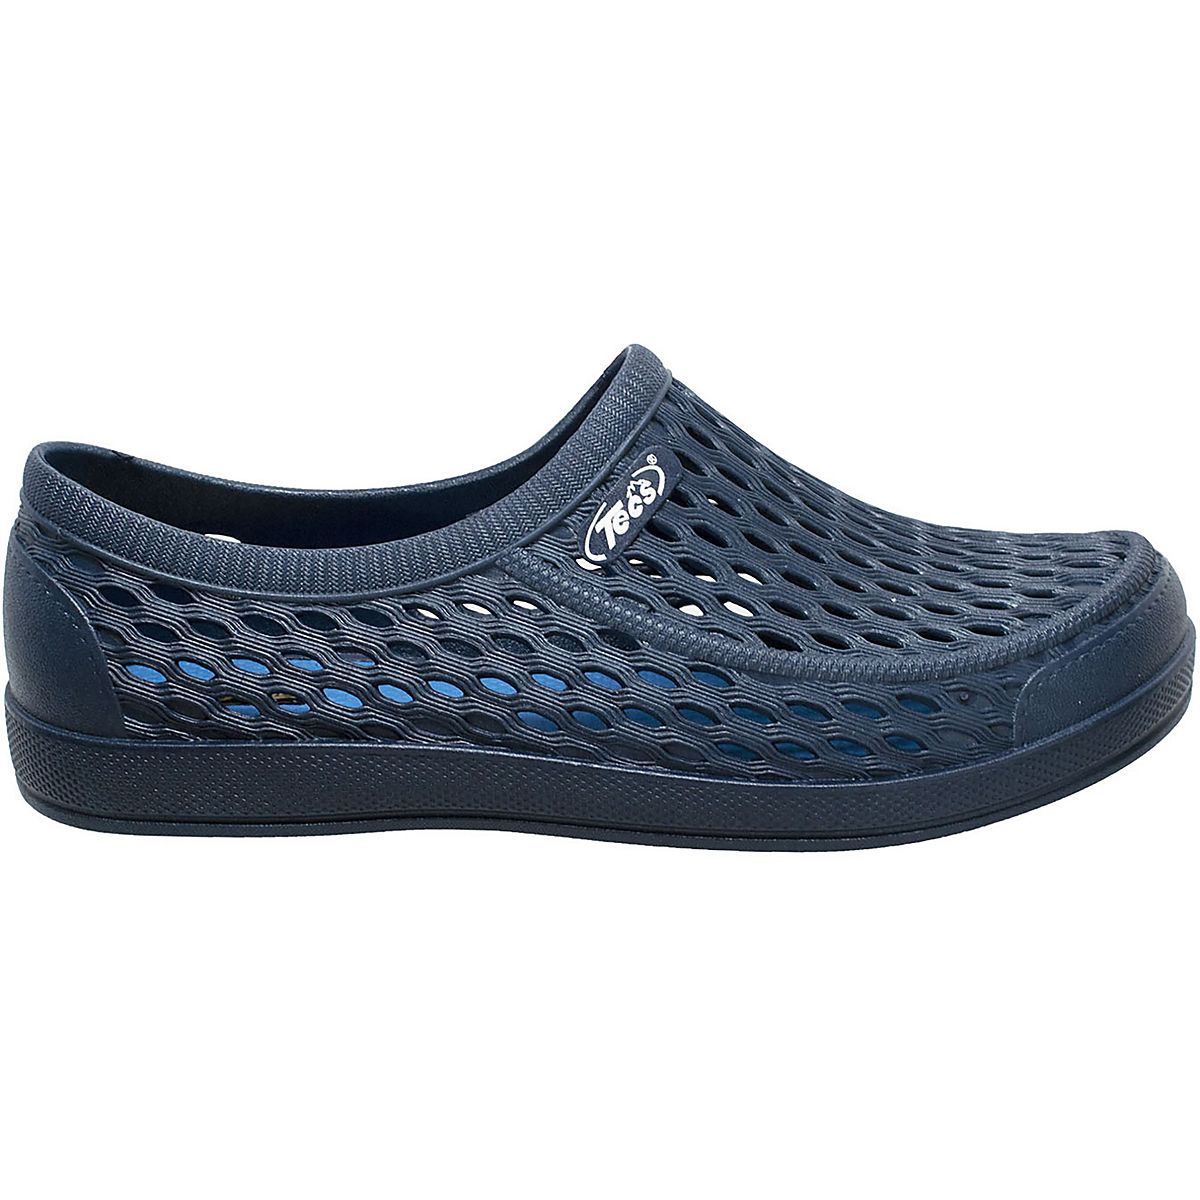 Tecs Men's 4 in Relax AquaTecs Garden Shoes | Academy